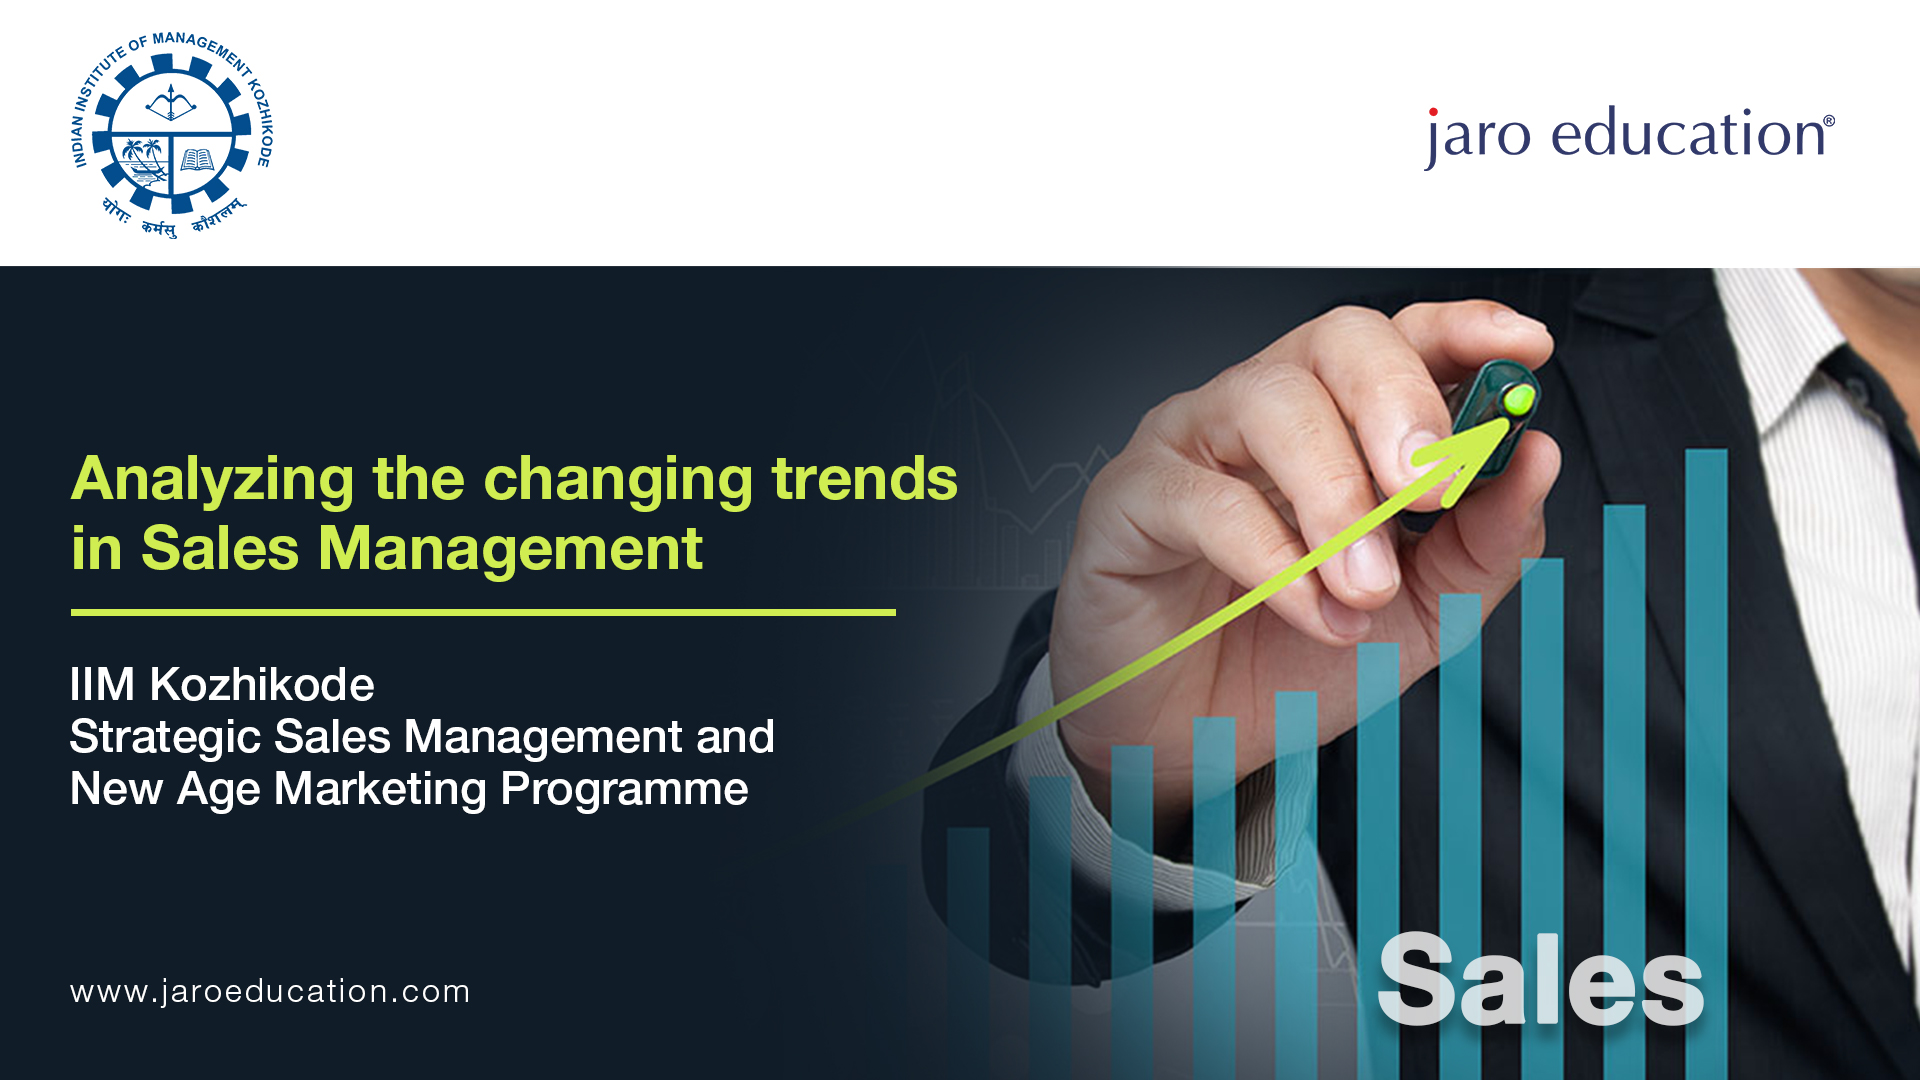 Strategic-Sales-Management-and-New-Age-Marketing-Programme-Jaro